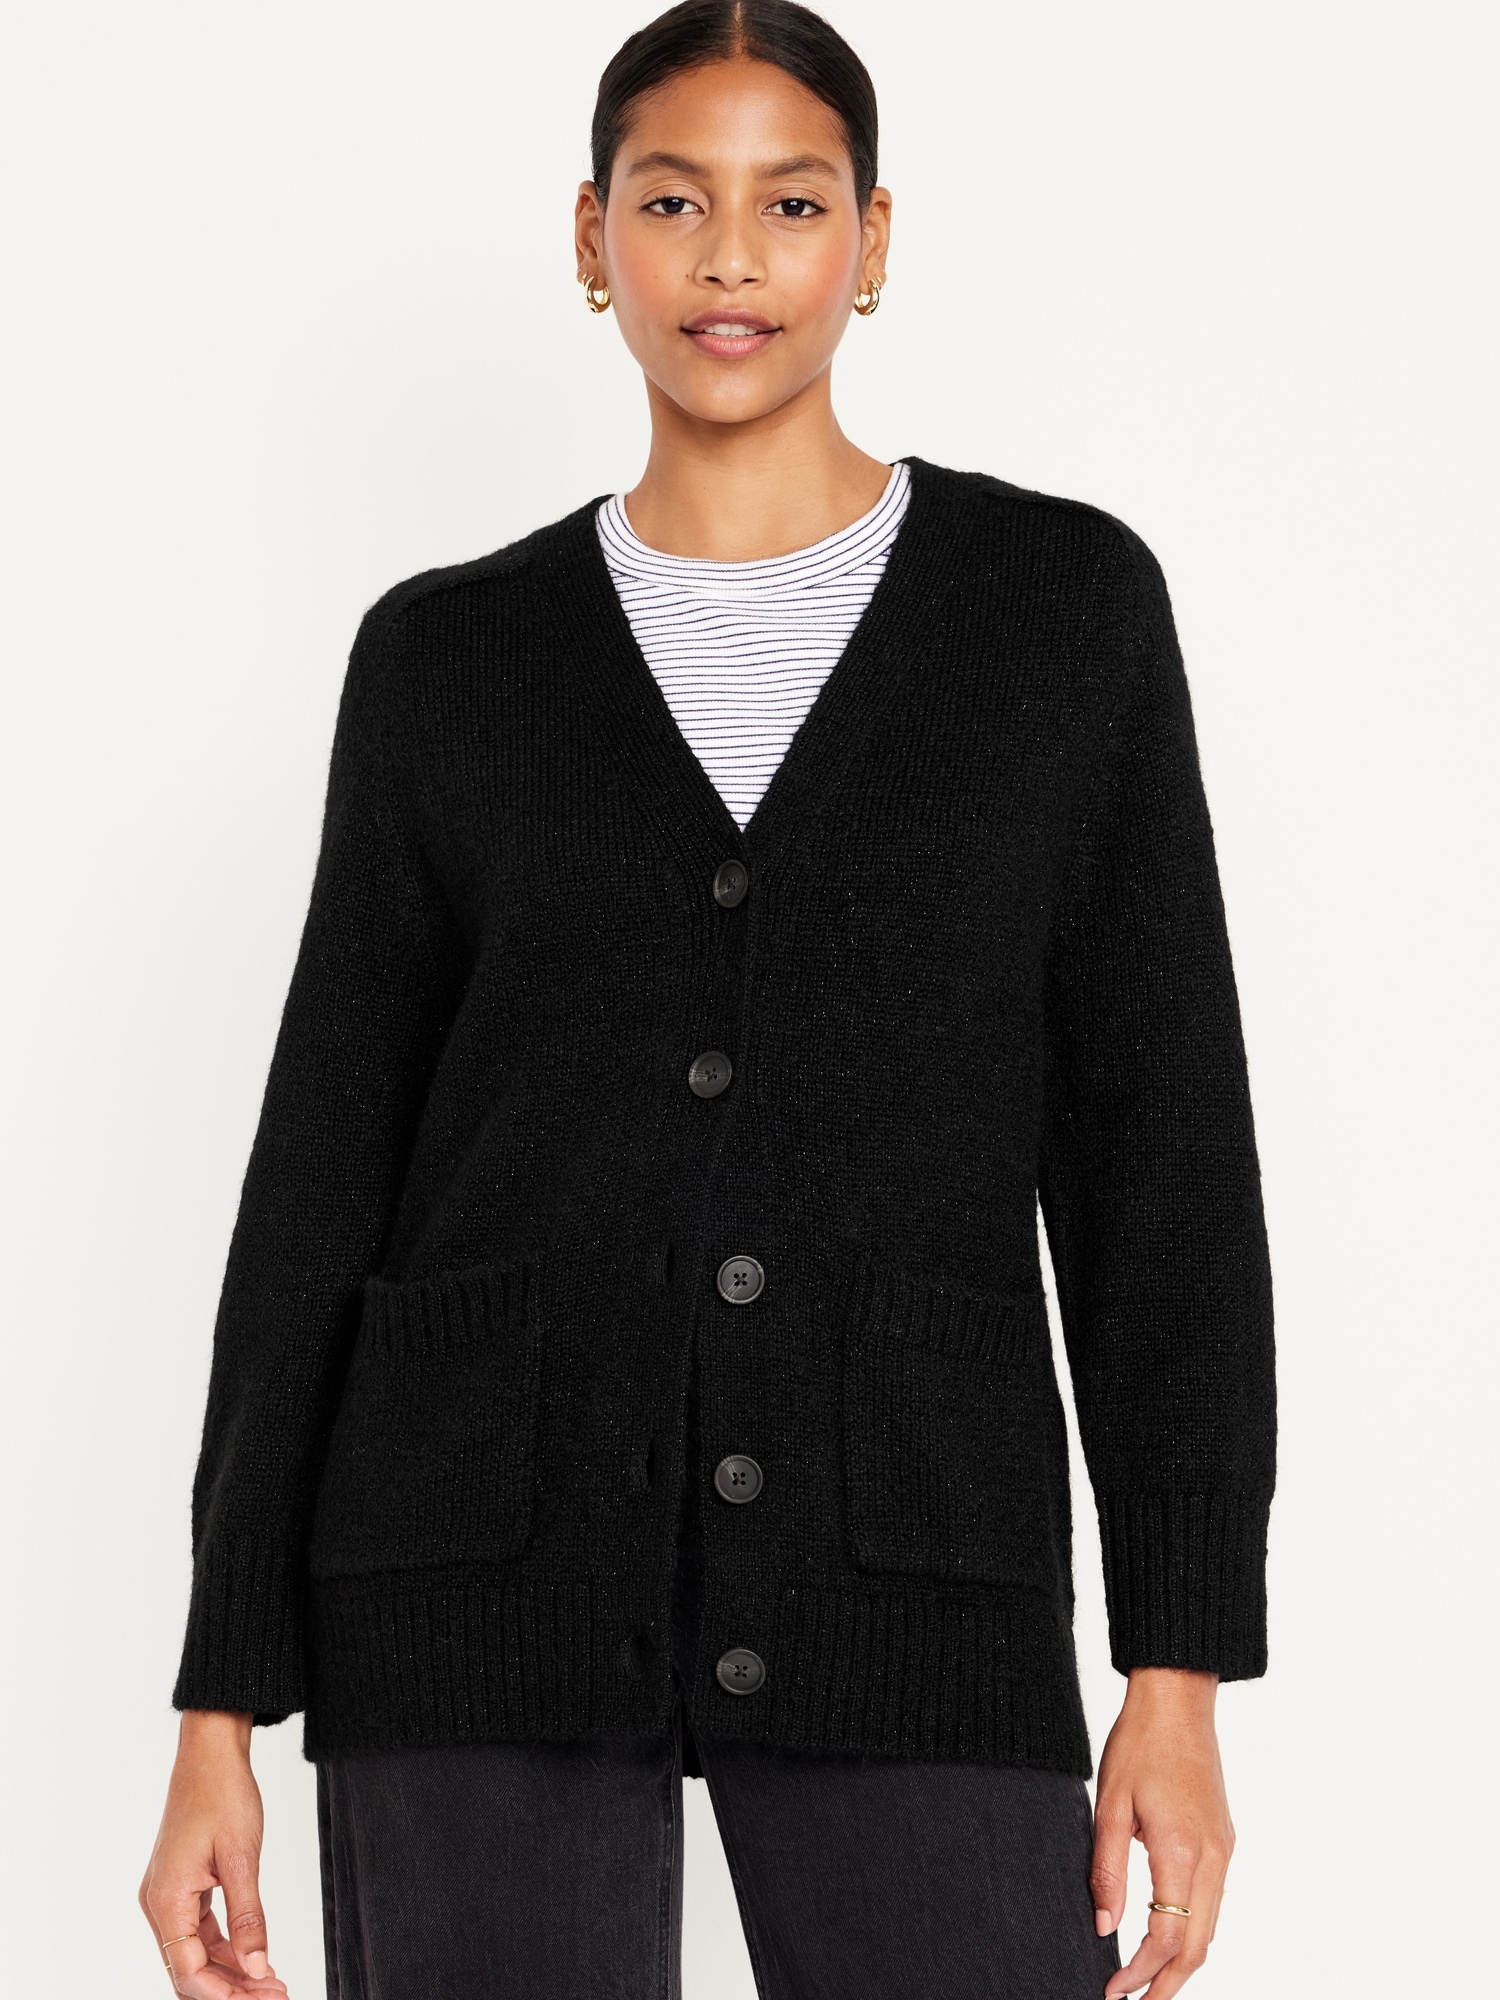 SoSoft Shawl-Collar Cardigan Sweater